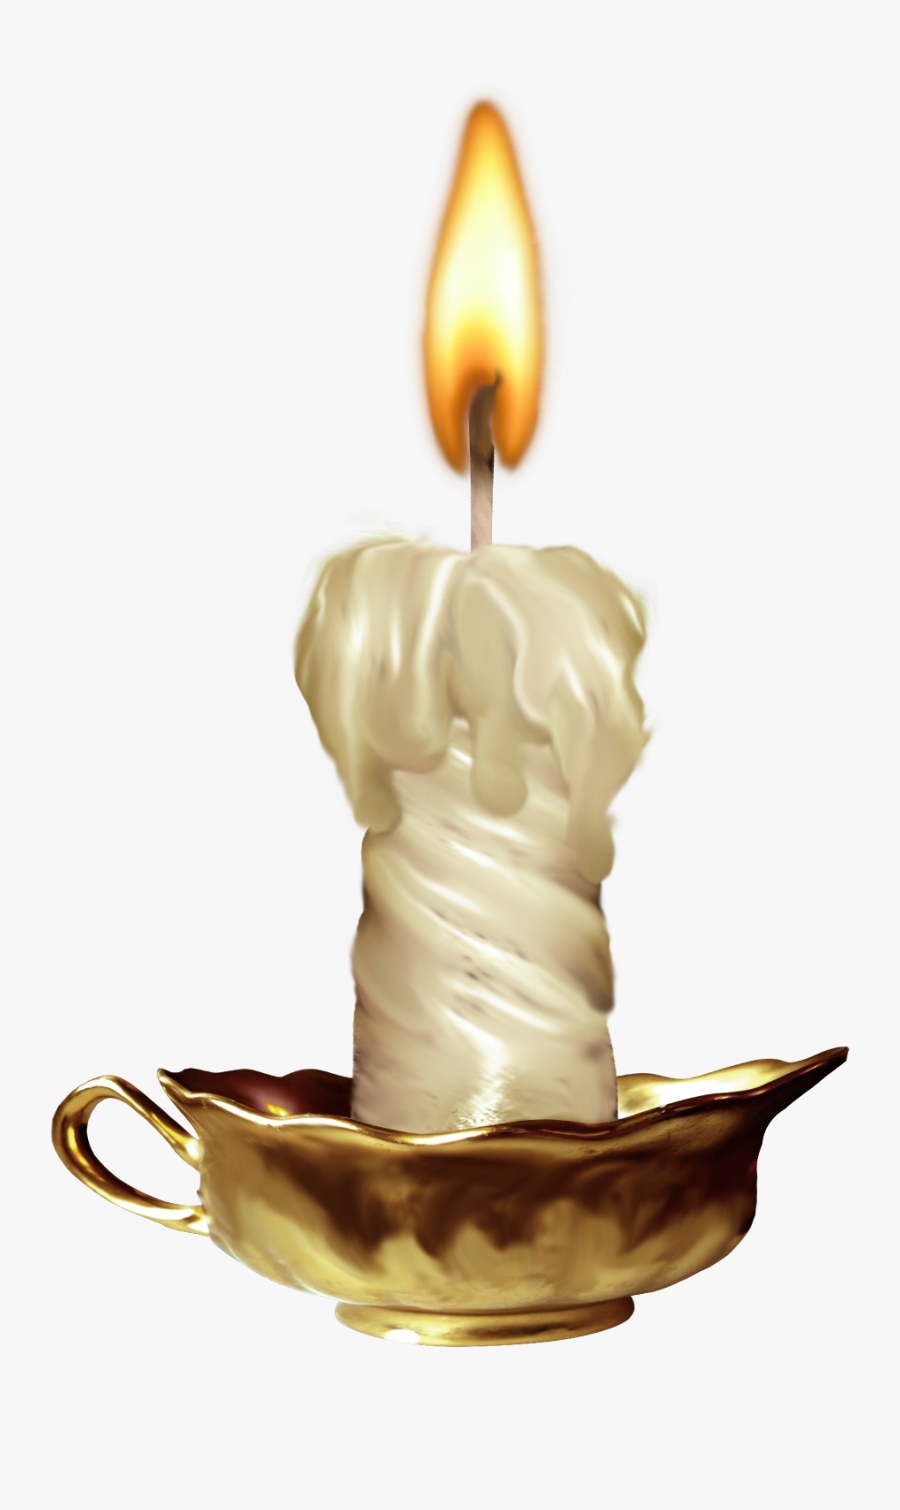 Candle Light Clip Art - Candle Light Png, Transparent Clipart